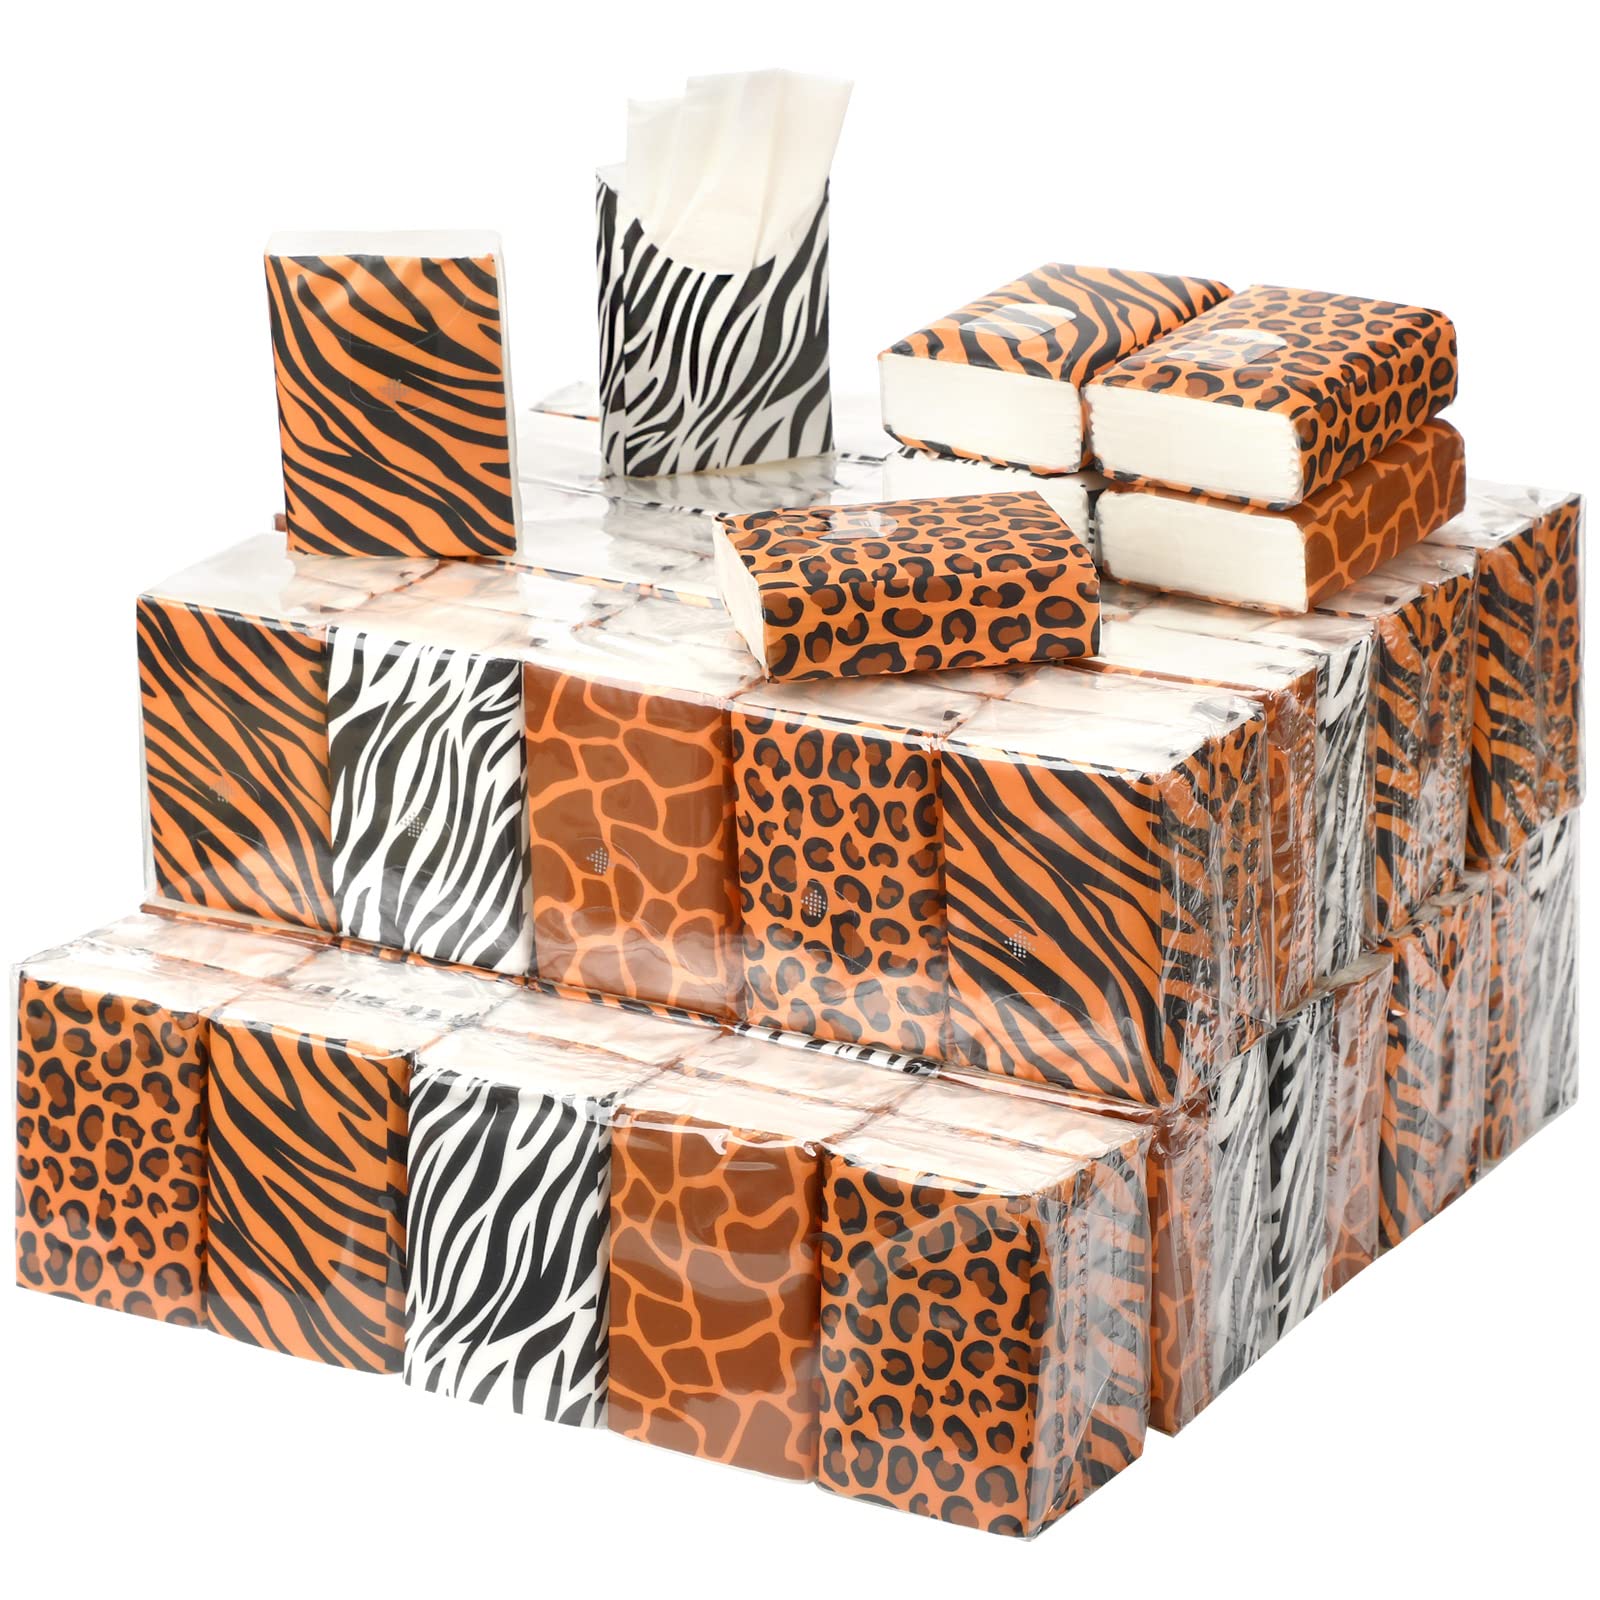 Animal Print Tissues, Zebra Print Tissues, Jaguar Print Tissues, Get Well  Gift, Tissue Box Cover, Washable Cover, Square Tissue Box Cover -   Sweden